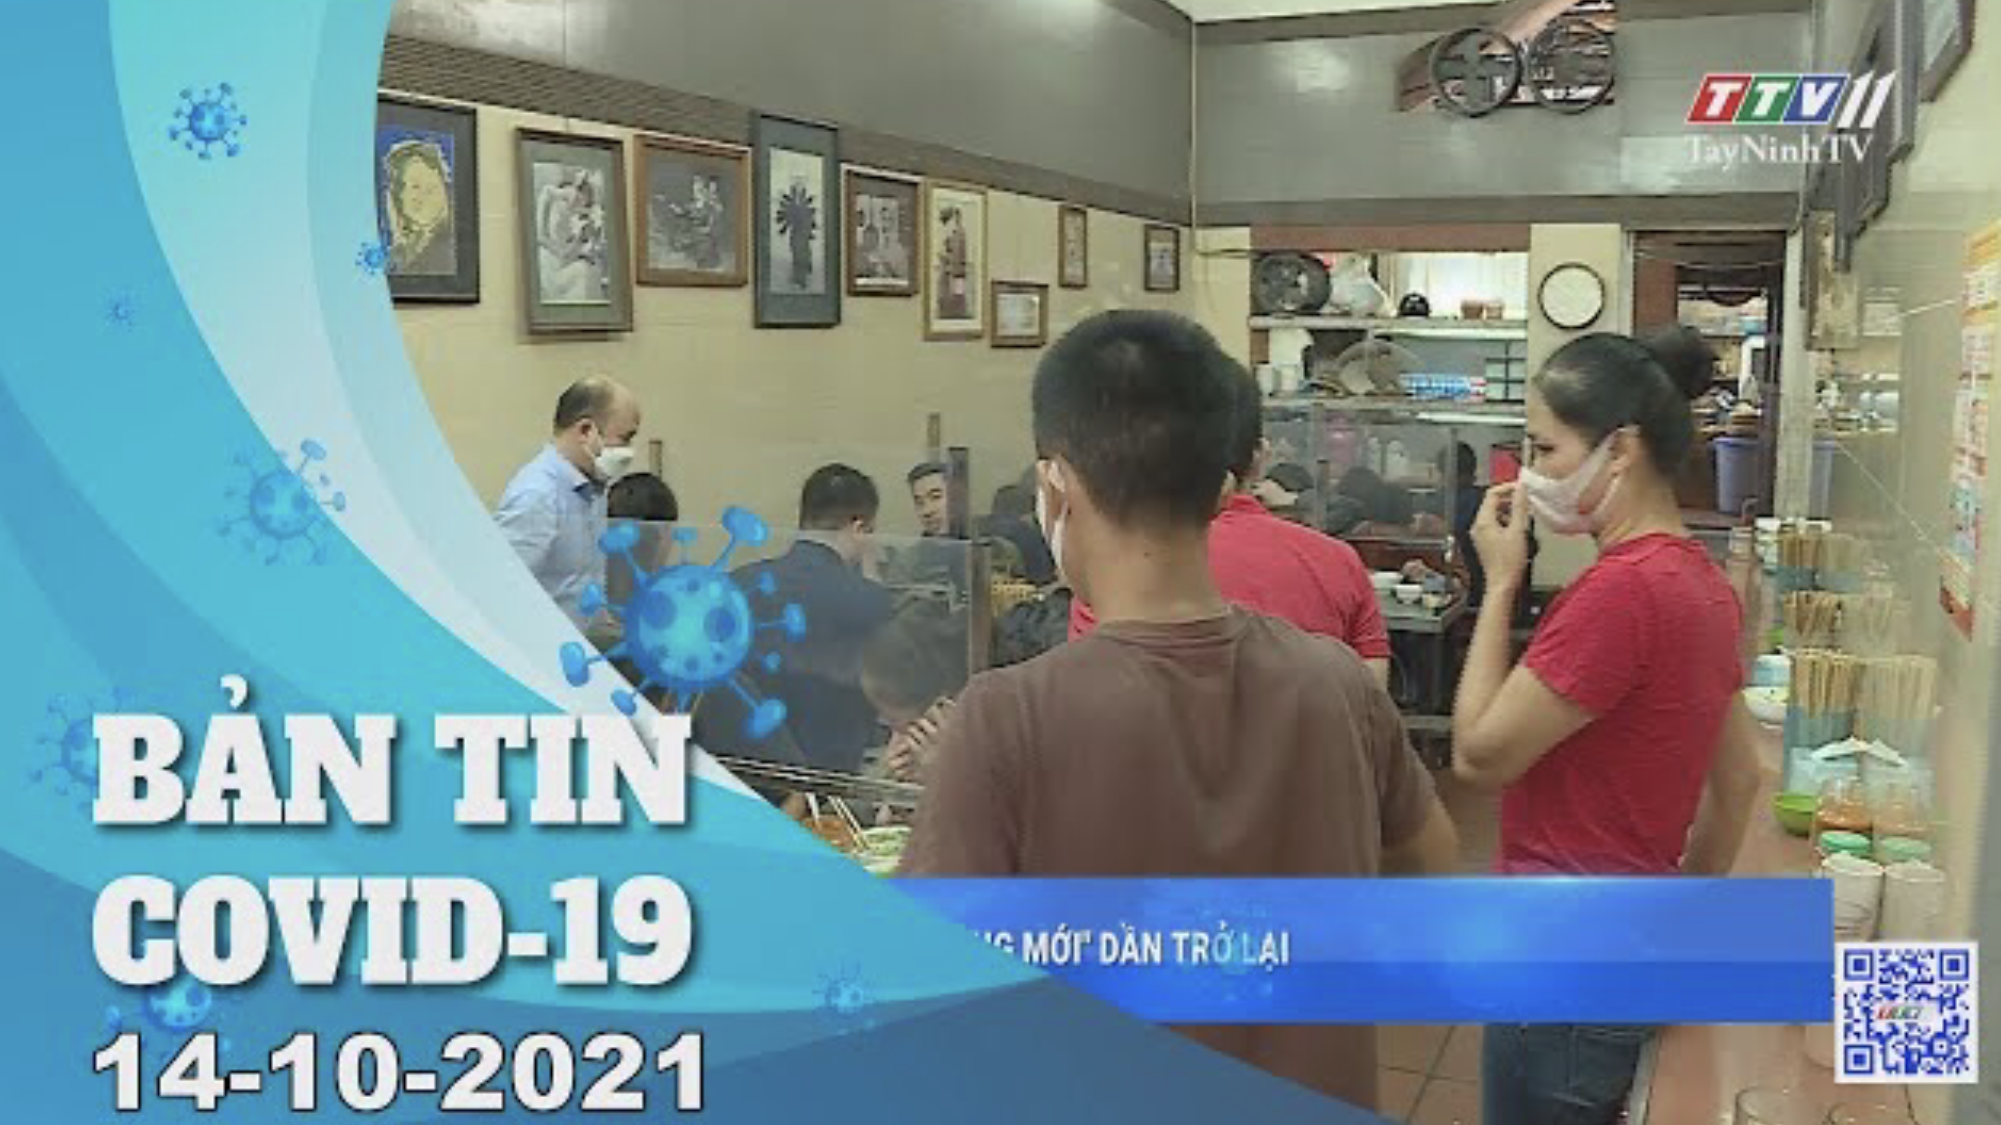 BẢN TIN COVID-19 14/10/2021 | Tin tức hôm nay | TayNinhTV